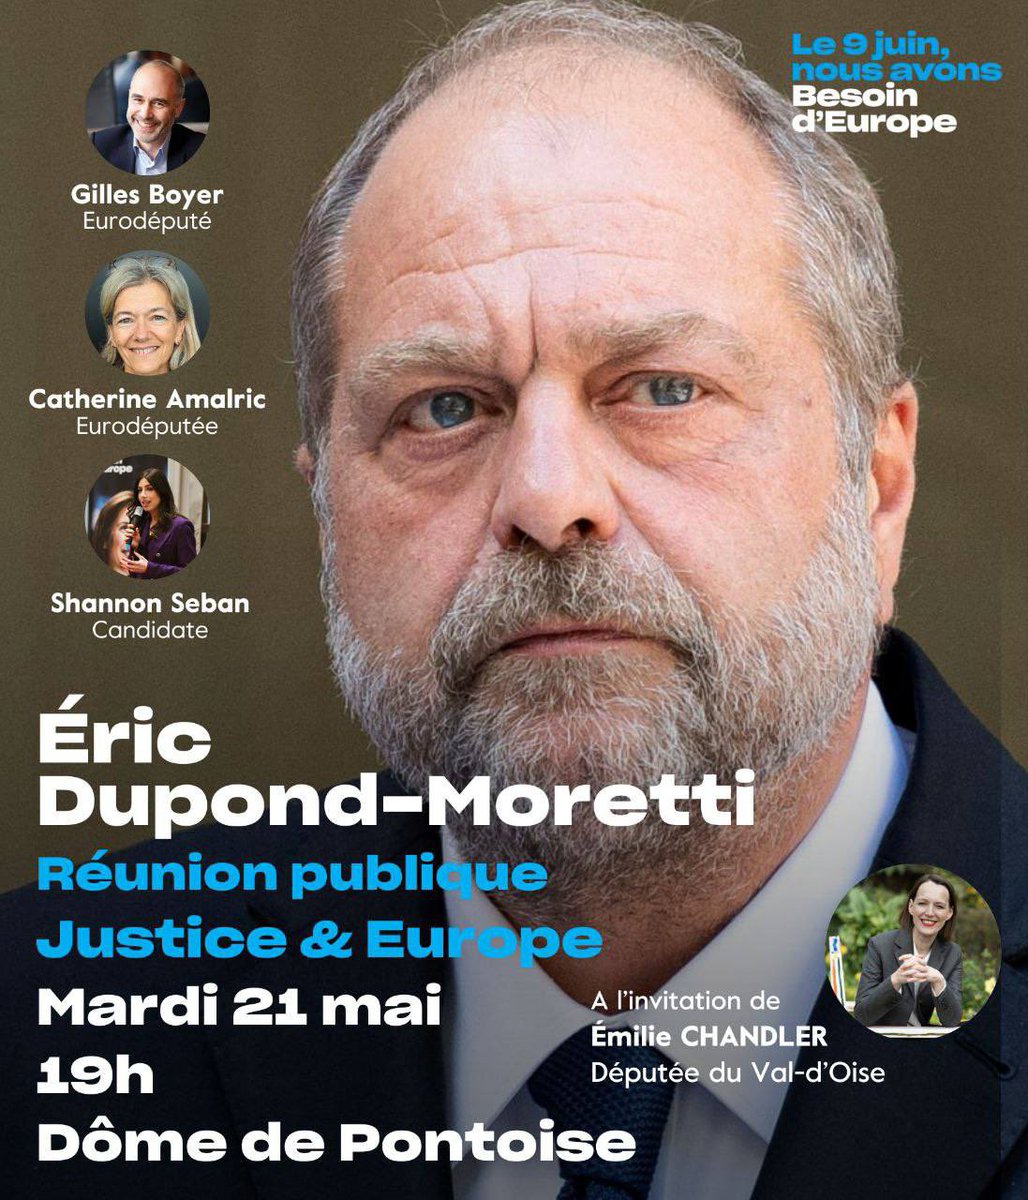 A demain à Pontoise avec Eric Dupont-Moretti ! @BesoindEurope @E_DupondM